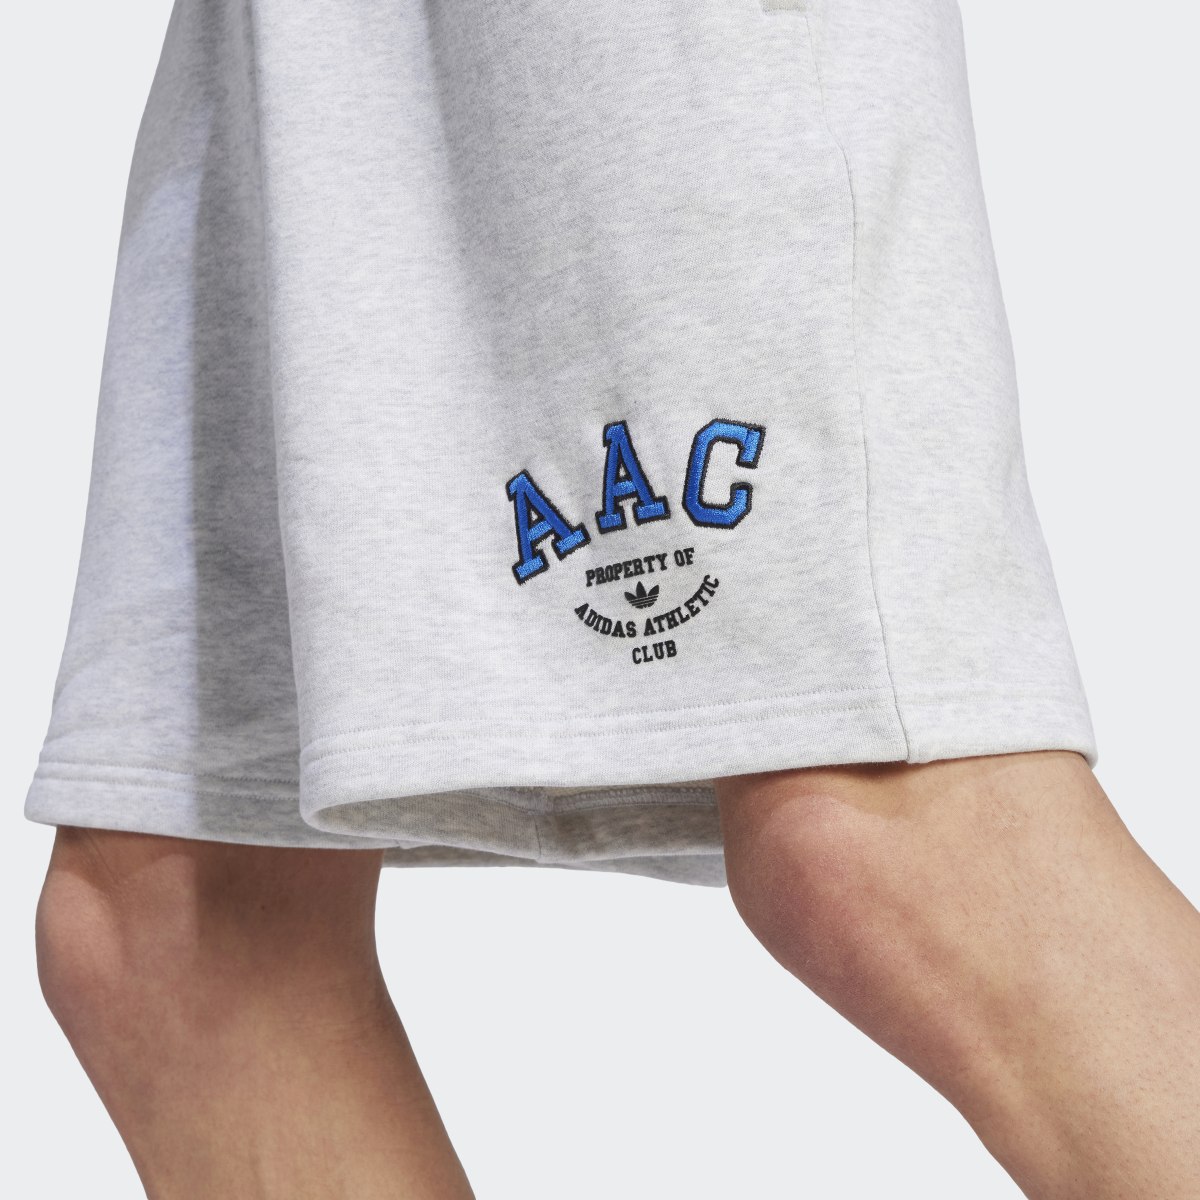 Adidas AAC Shorts. 6